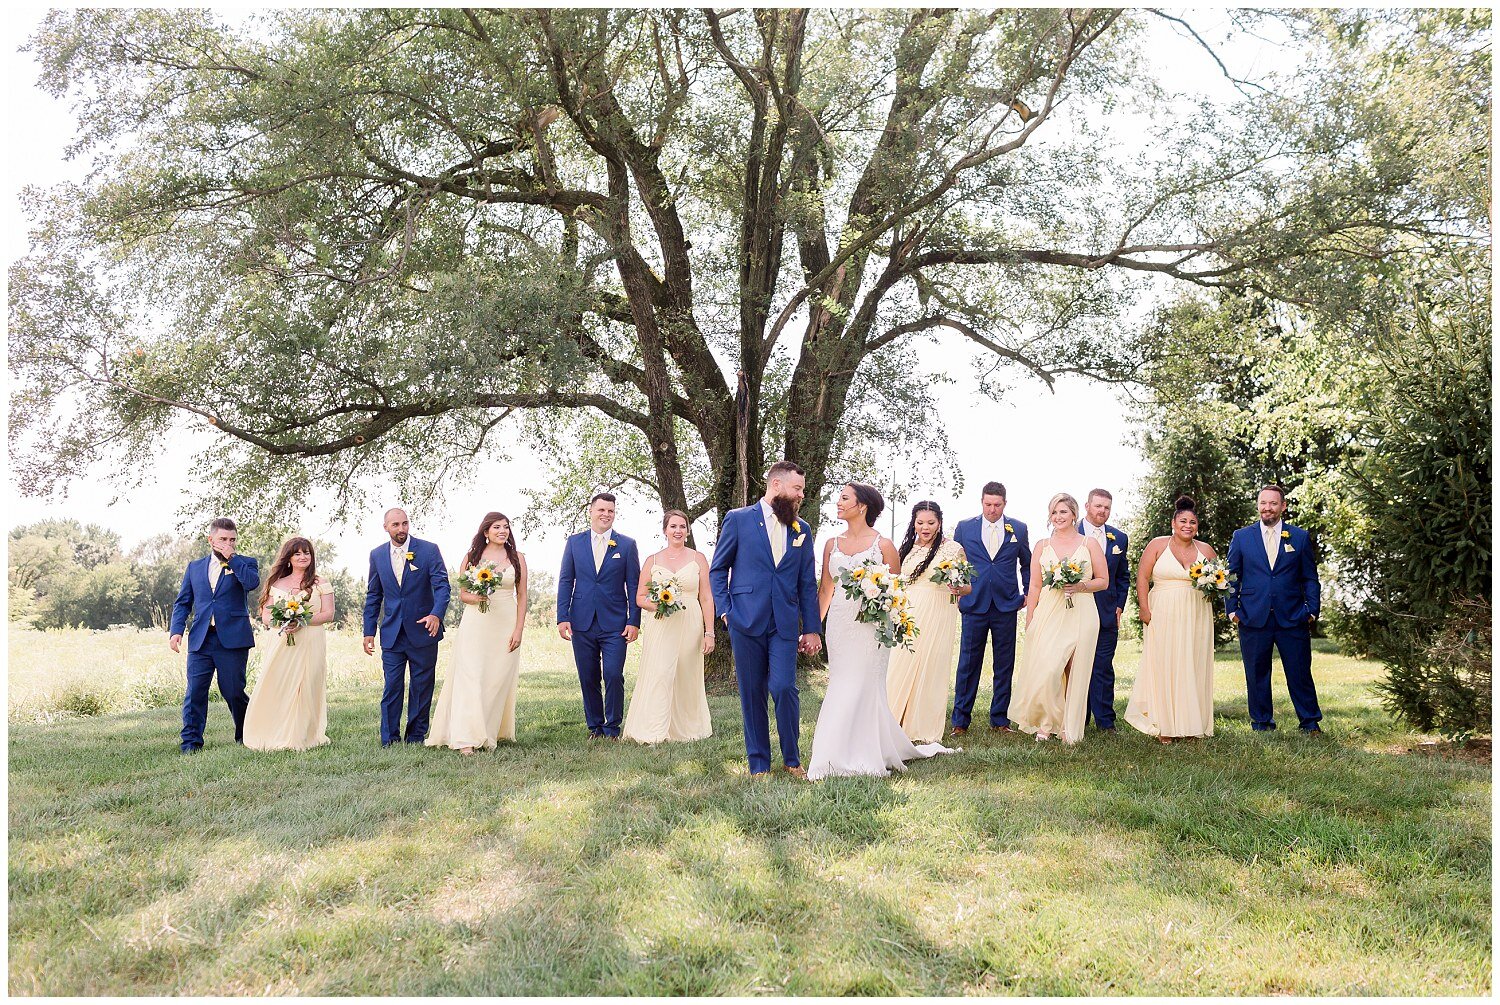 Yellow-and-Navy-Summer-Outdoor-Wedding-The-Legacy-Kansas-City-B+C-08-2020-Elizabeth-Ladean-Photography-photo-_5472.jpg